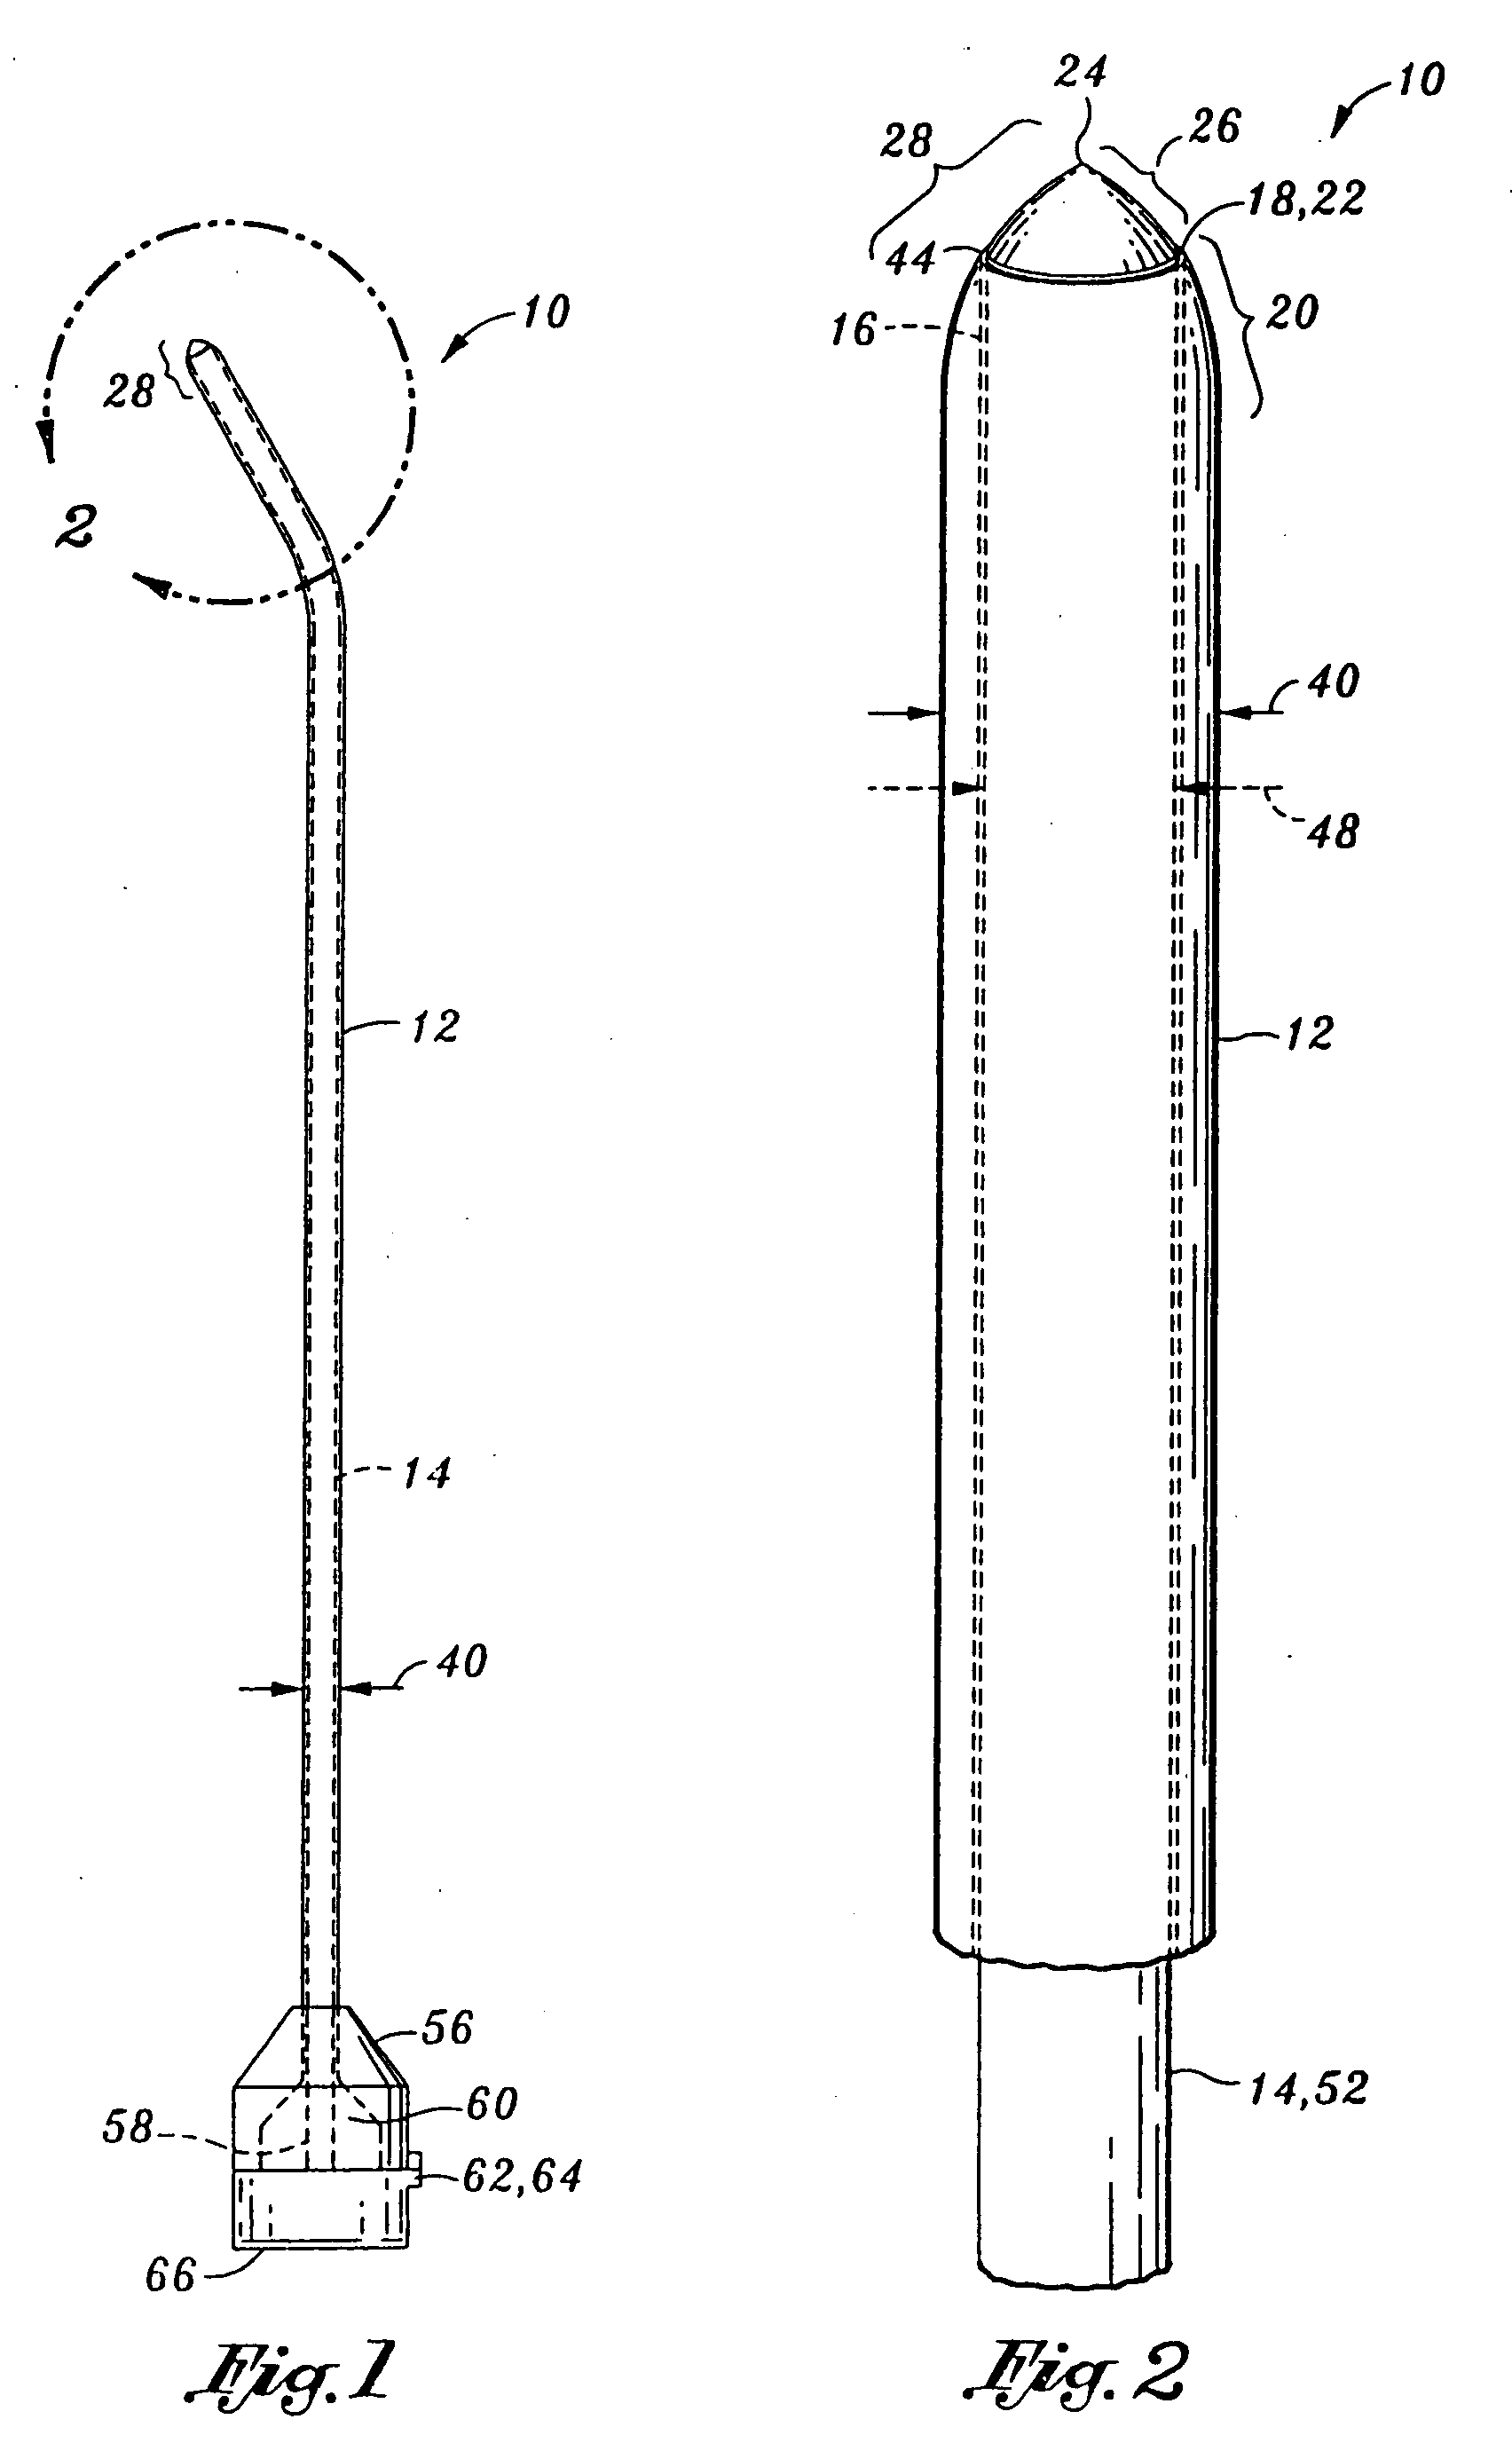 Cleveland round tip (CRT) needle